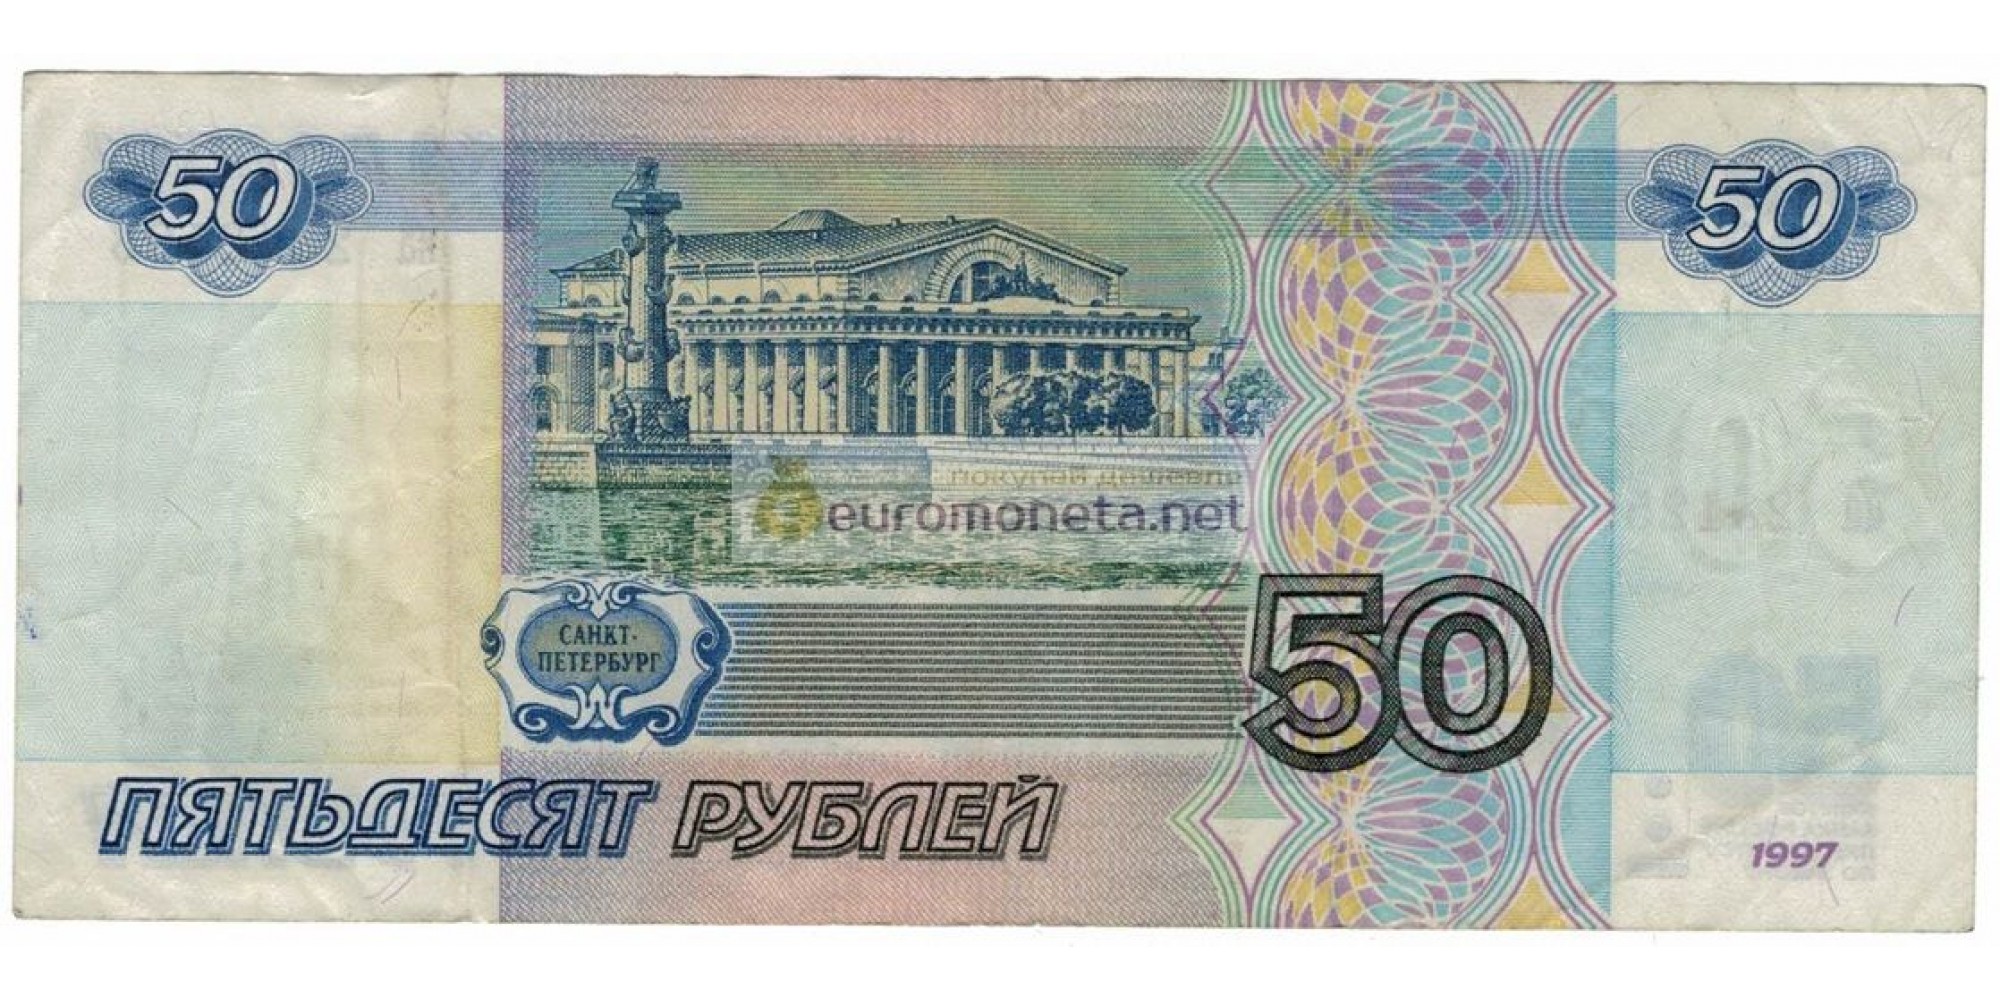 Steam 50 рублей фото 66